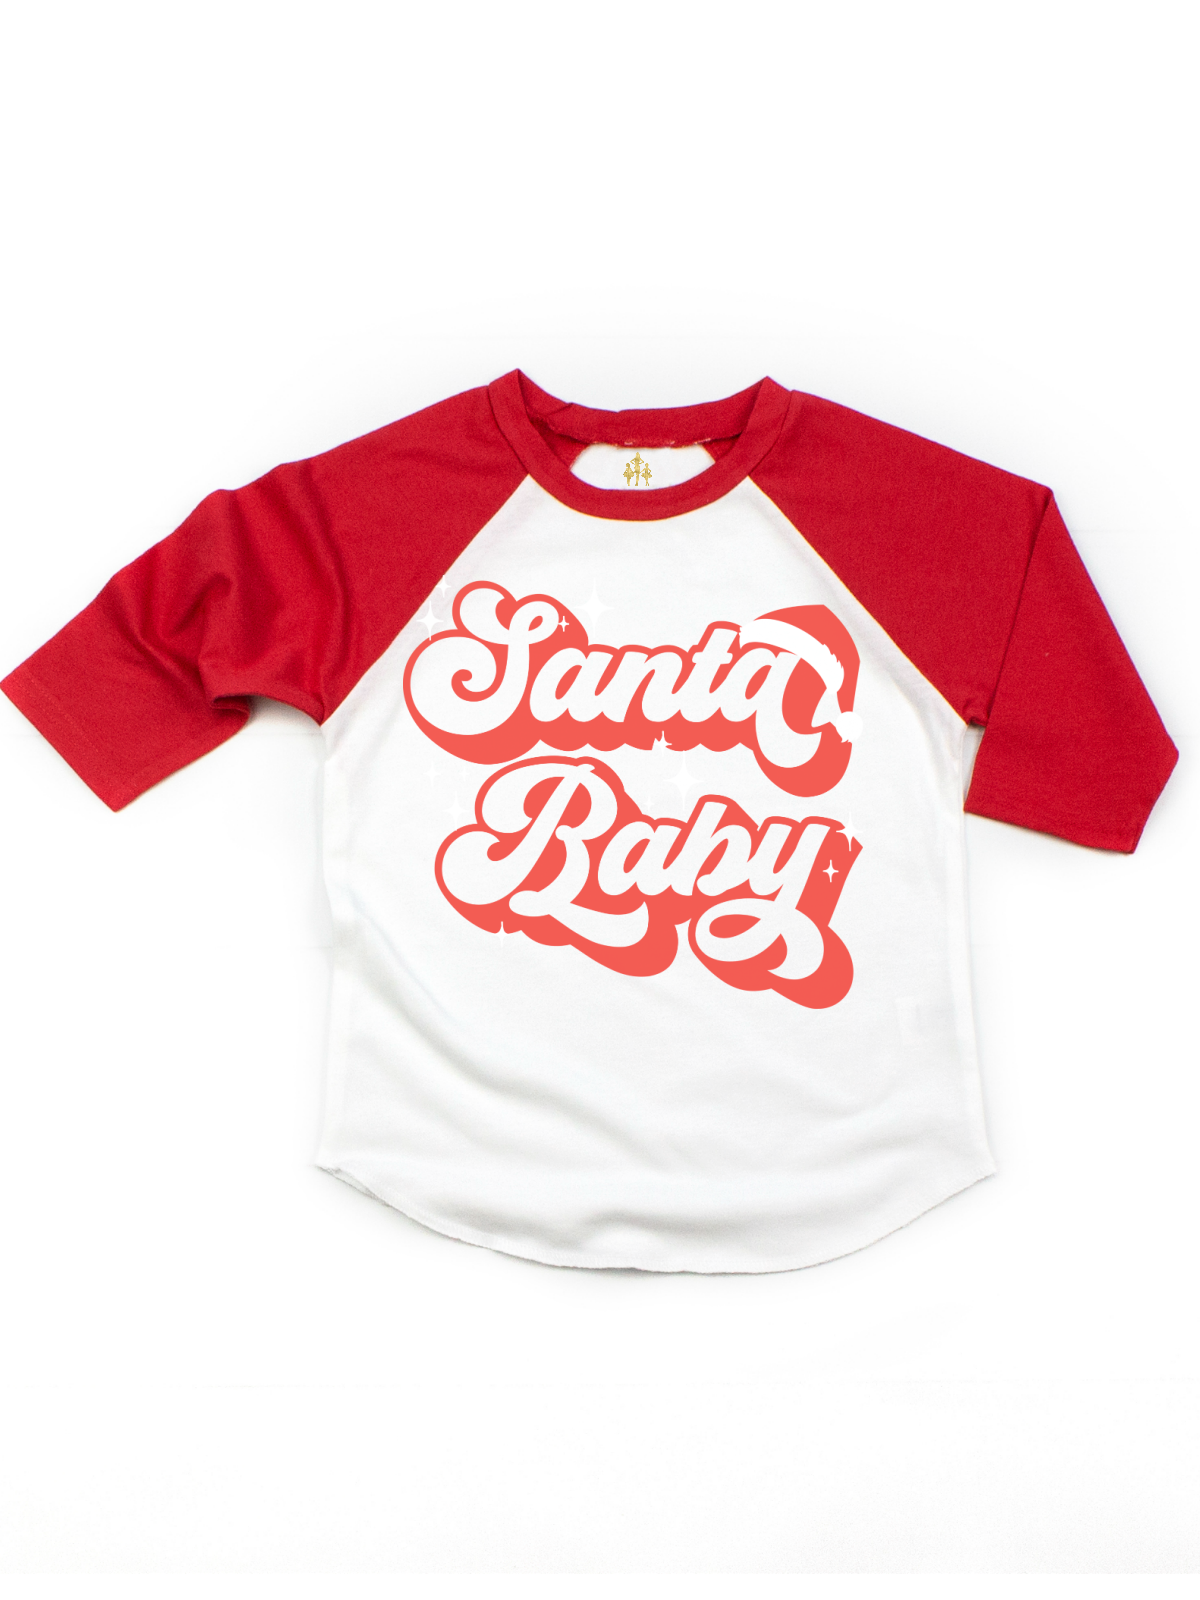 Santa Baby Kids Christmas Shirt